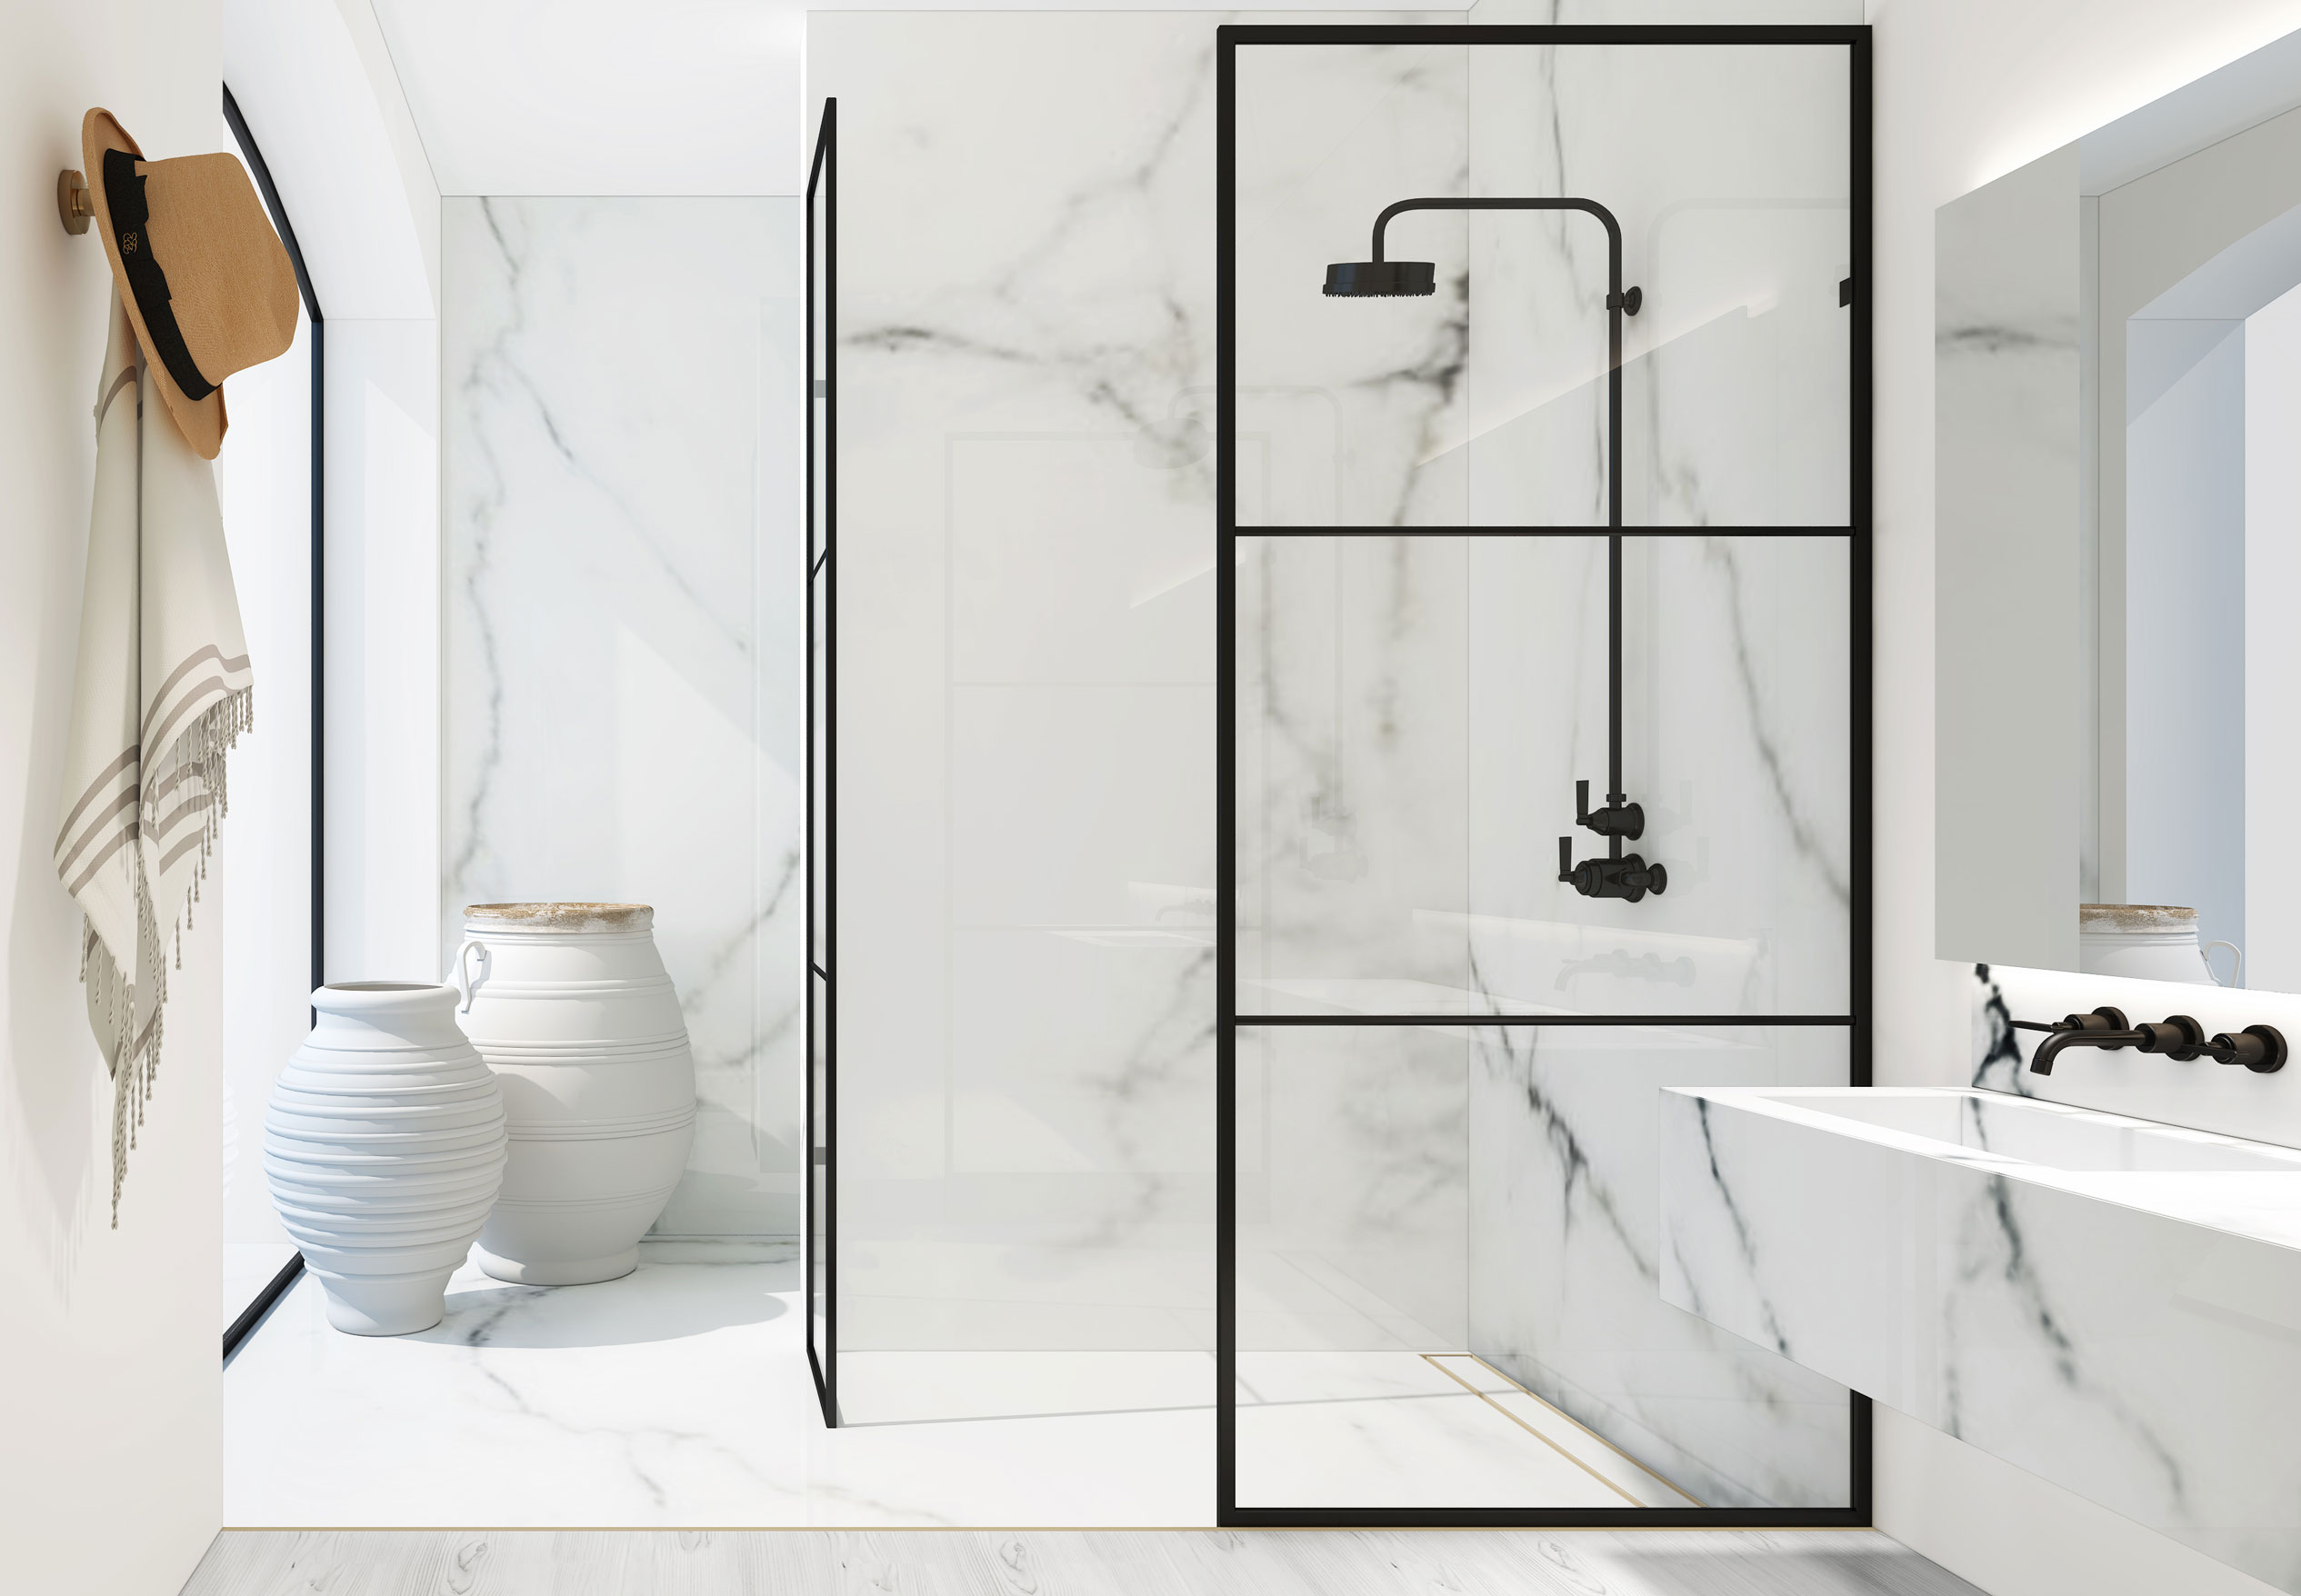 Shower Design For A Small Bathroom 6, Bathtub In Shower Room